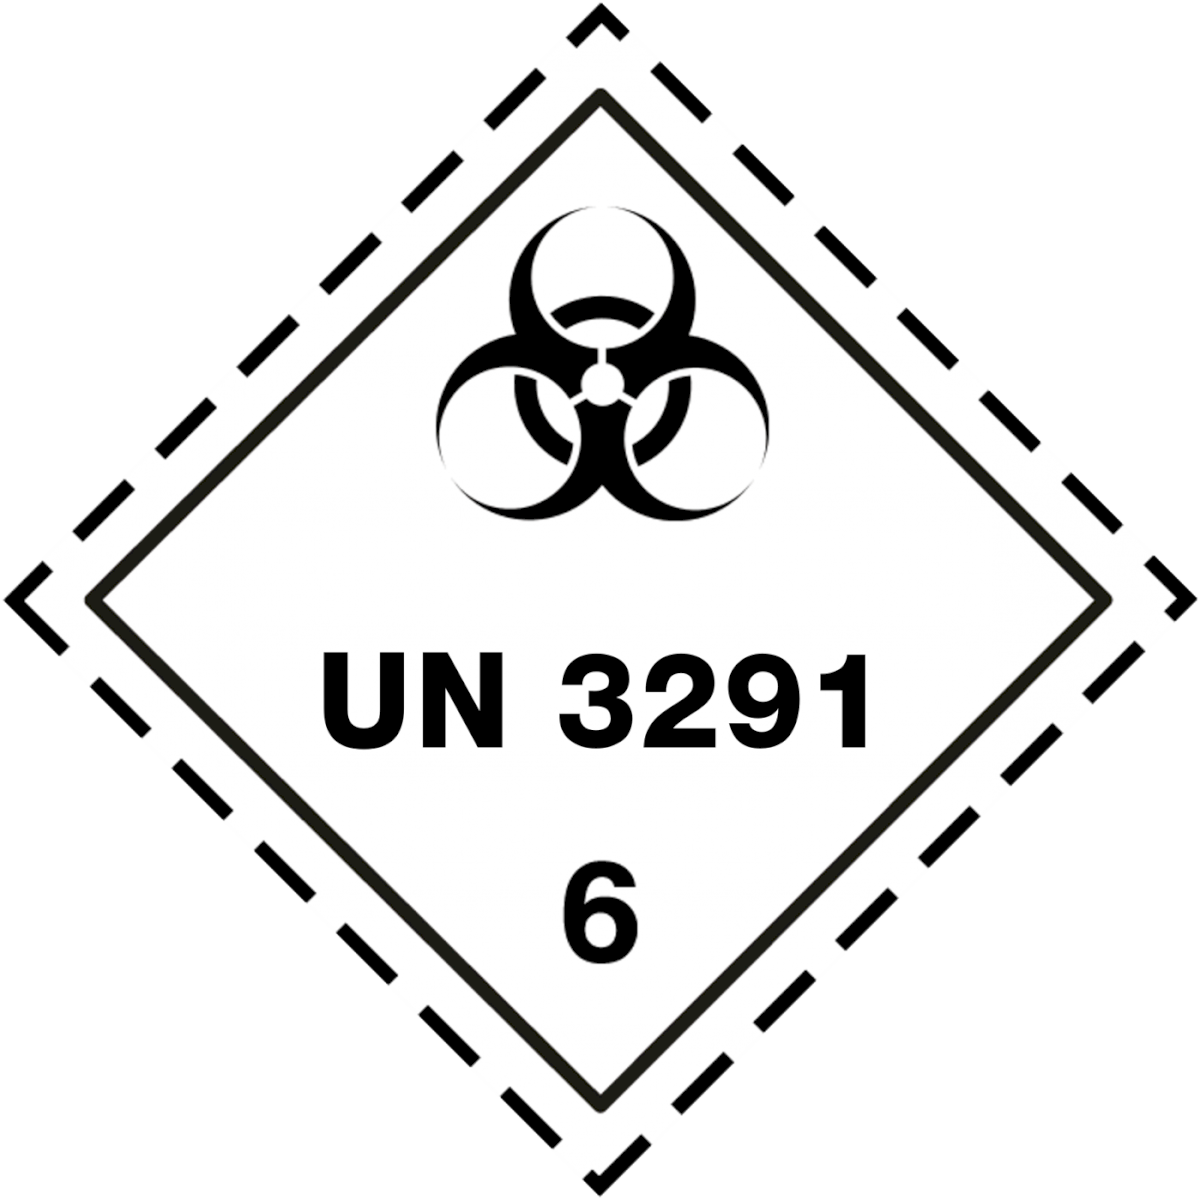 Labels For Class 6 Infectious Substances Division 6 2